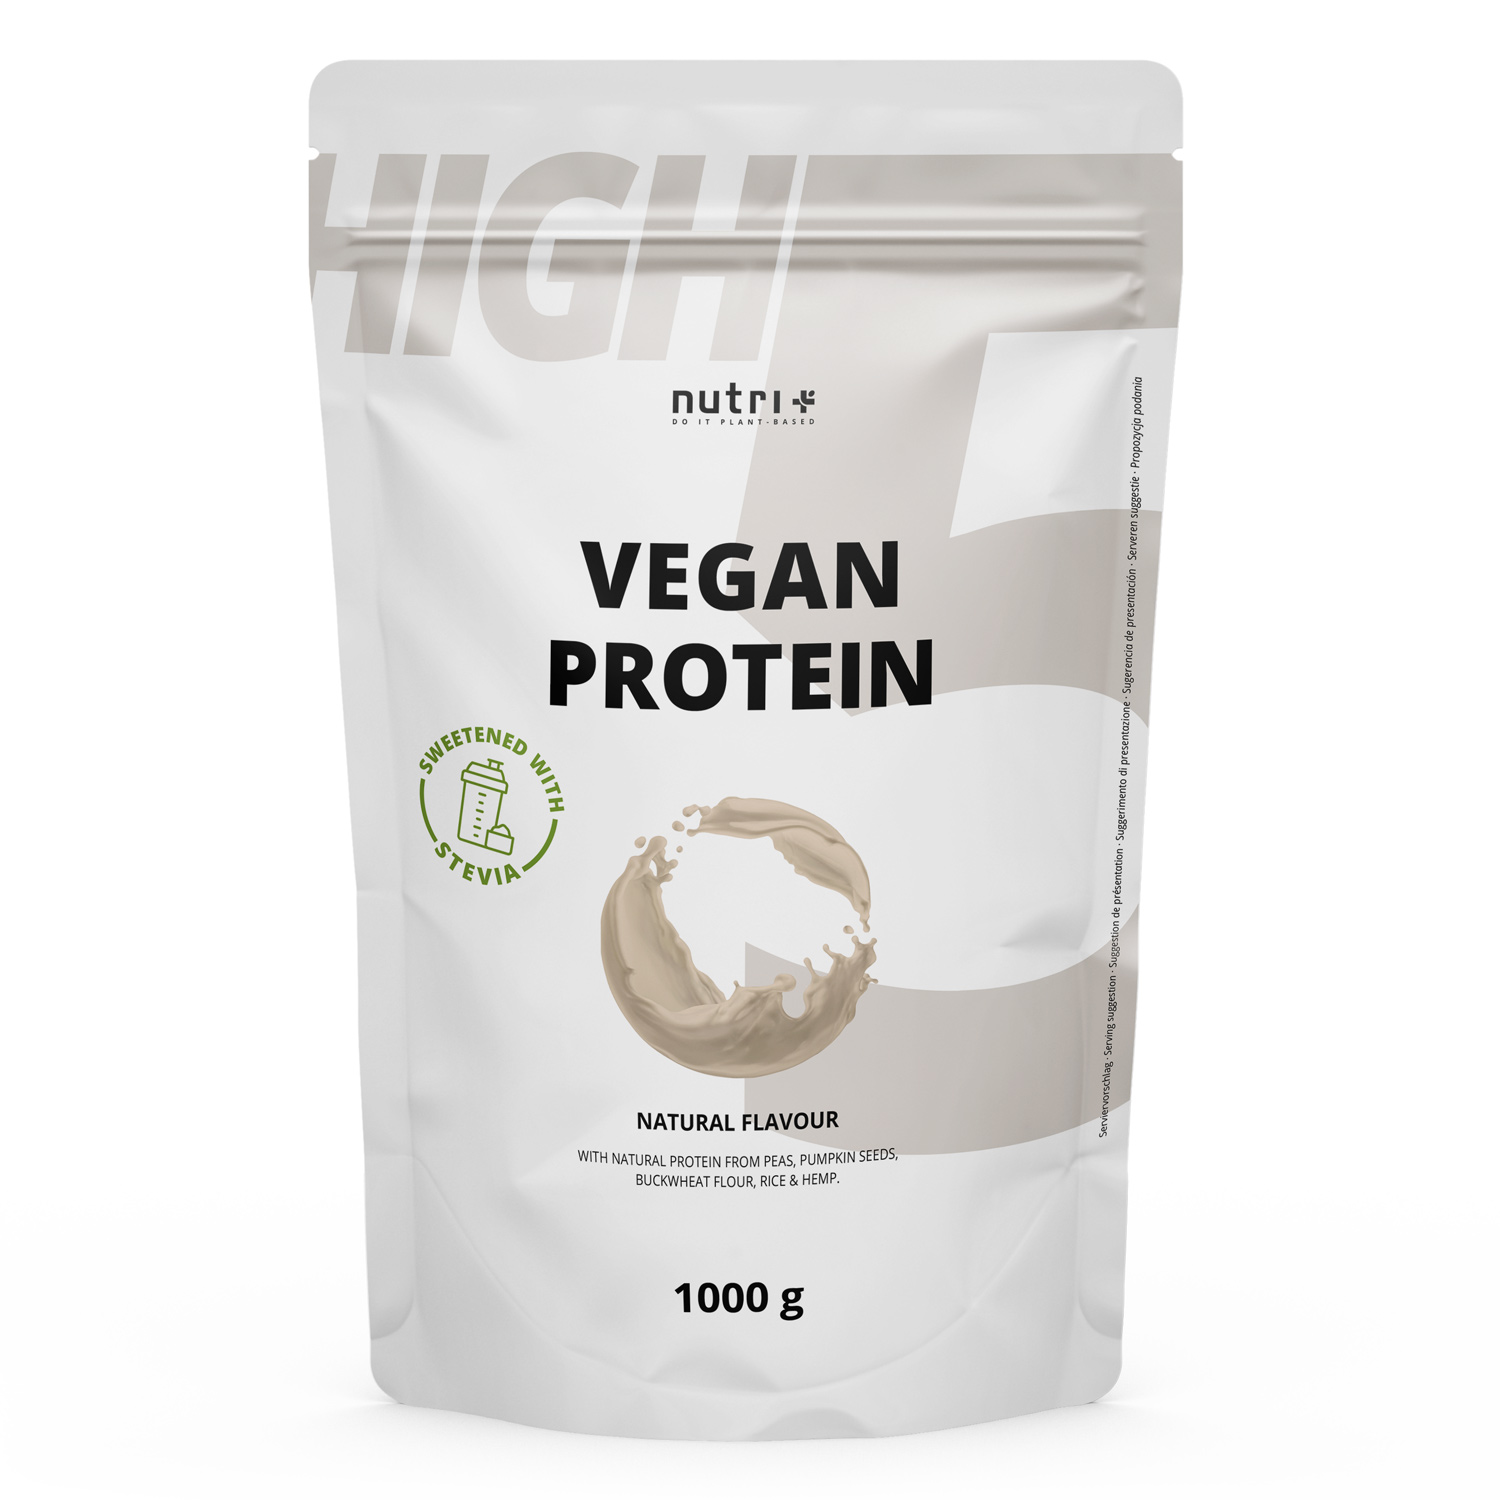 Vegan High 5 Protein